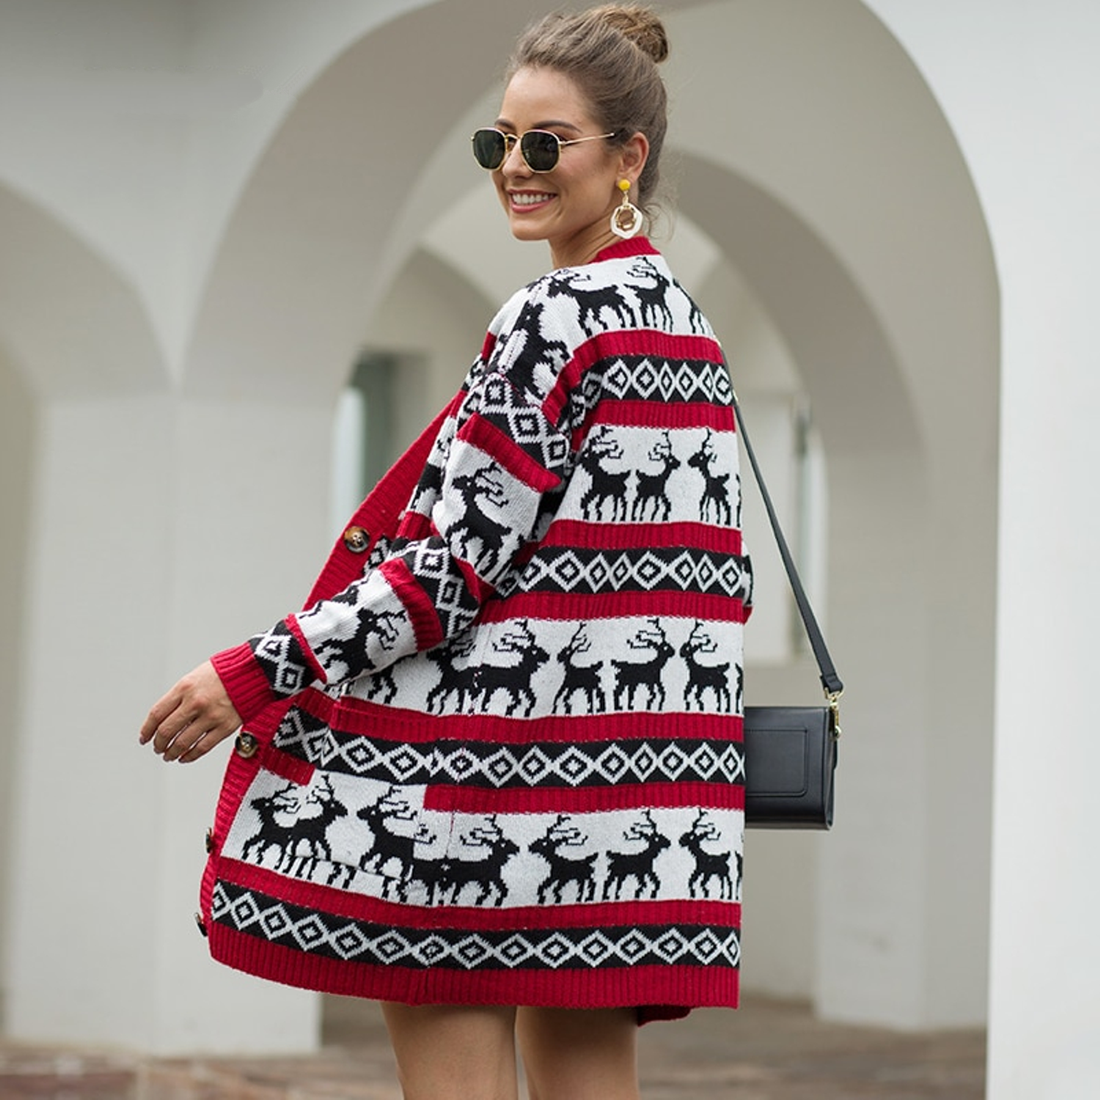 Women's Autumn/Winter Knitted Oversized Loose Cardigan